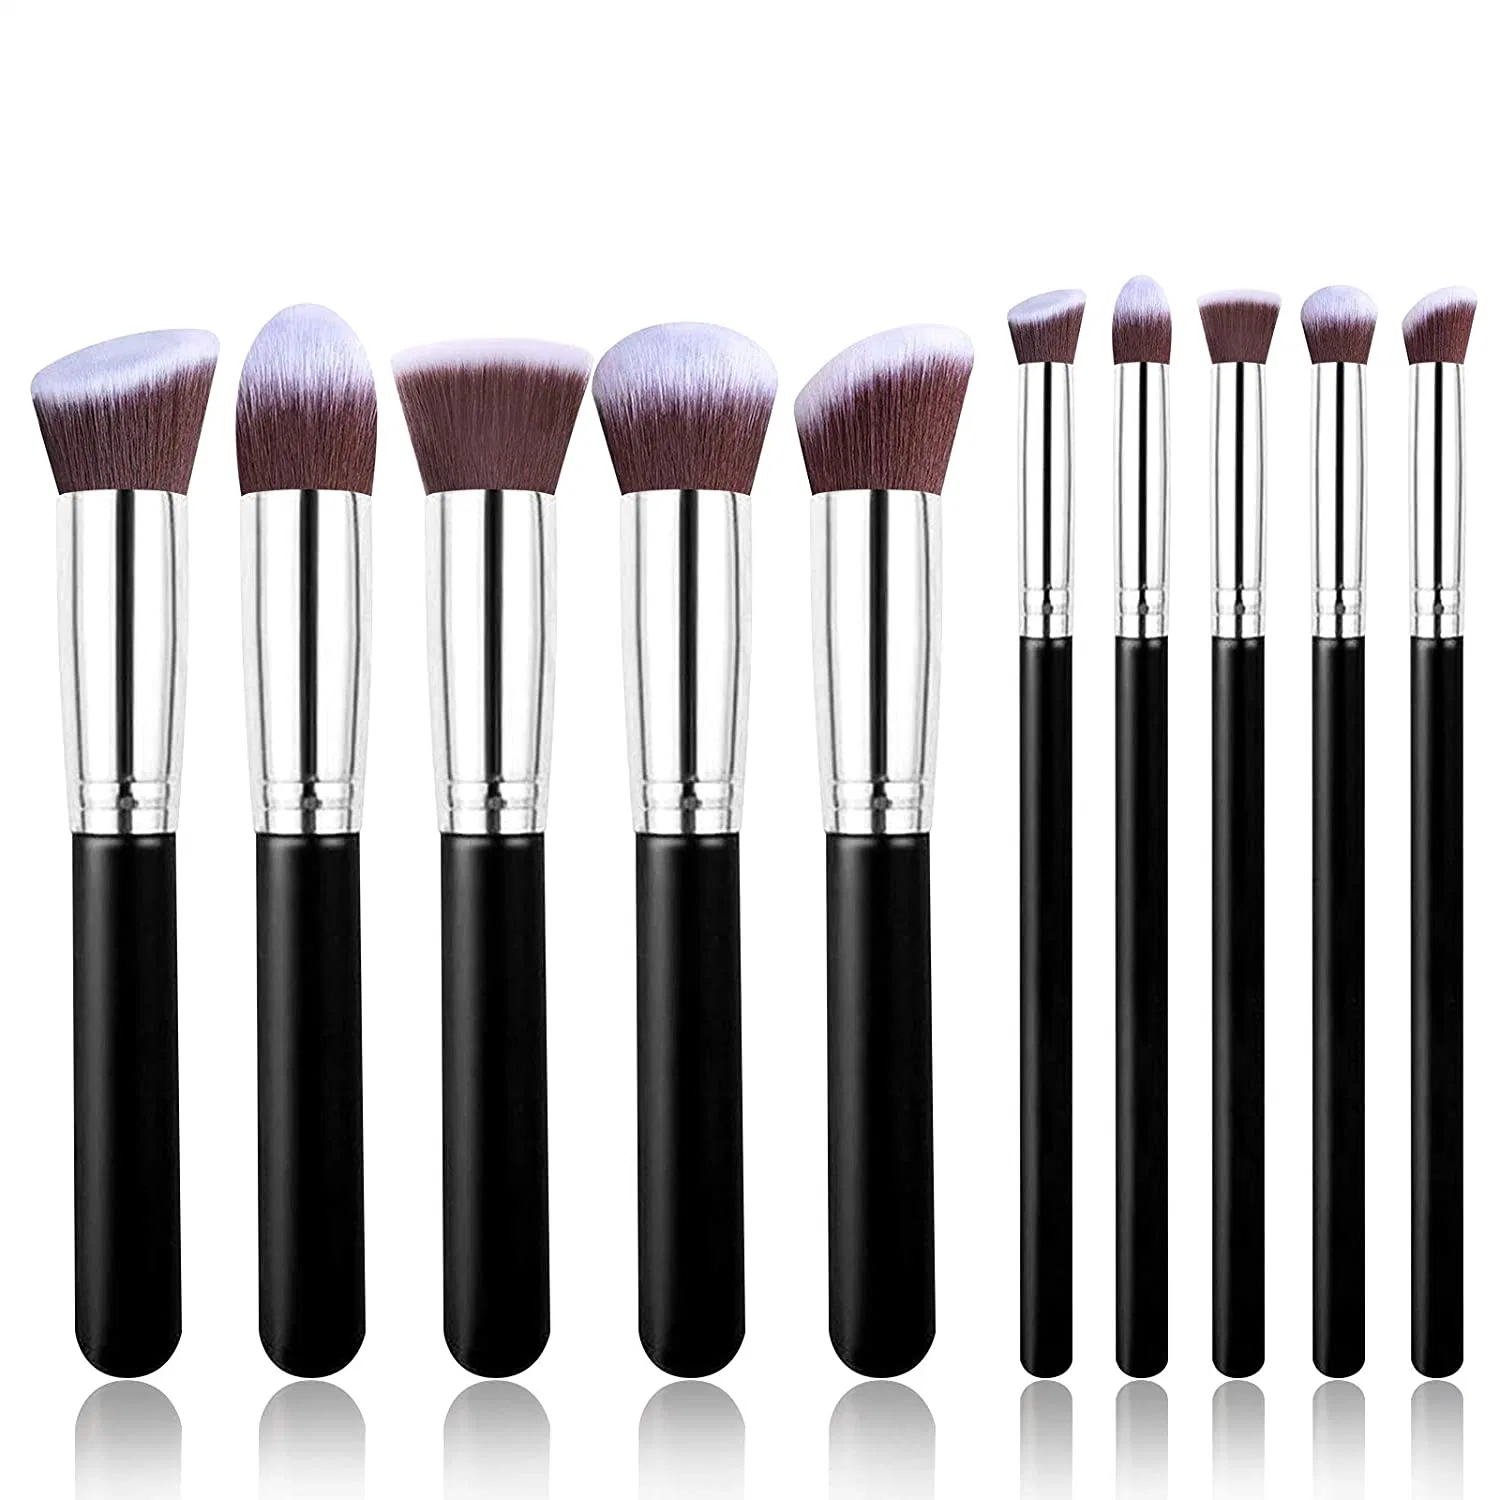 Make-Up Tools Kit Premium Synthetic Foundation Pinsel Blending Face Powder Blush Concealers Eye Shadows 10 PCS Make Up Brushes Set